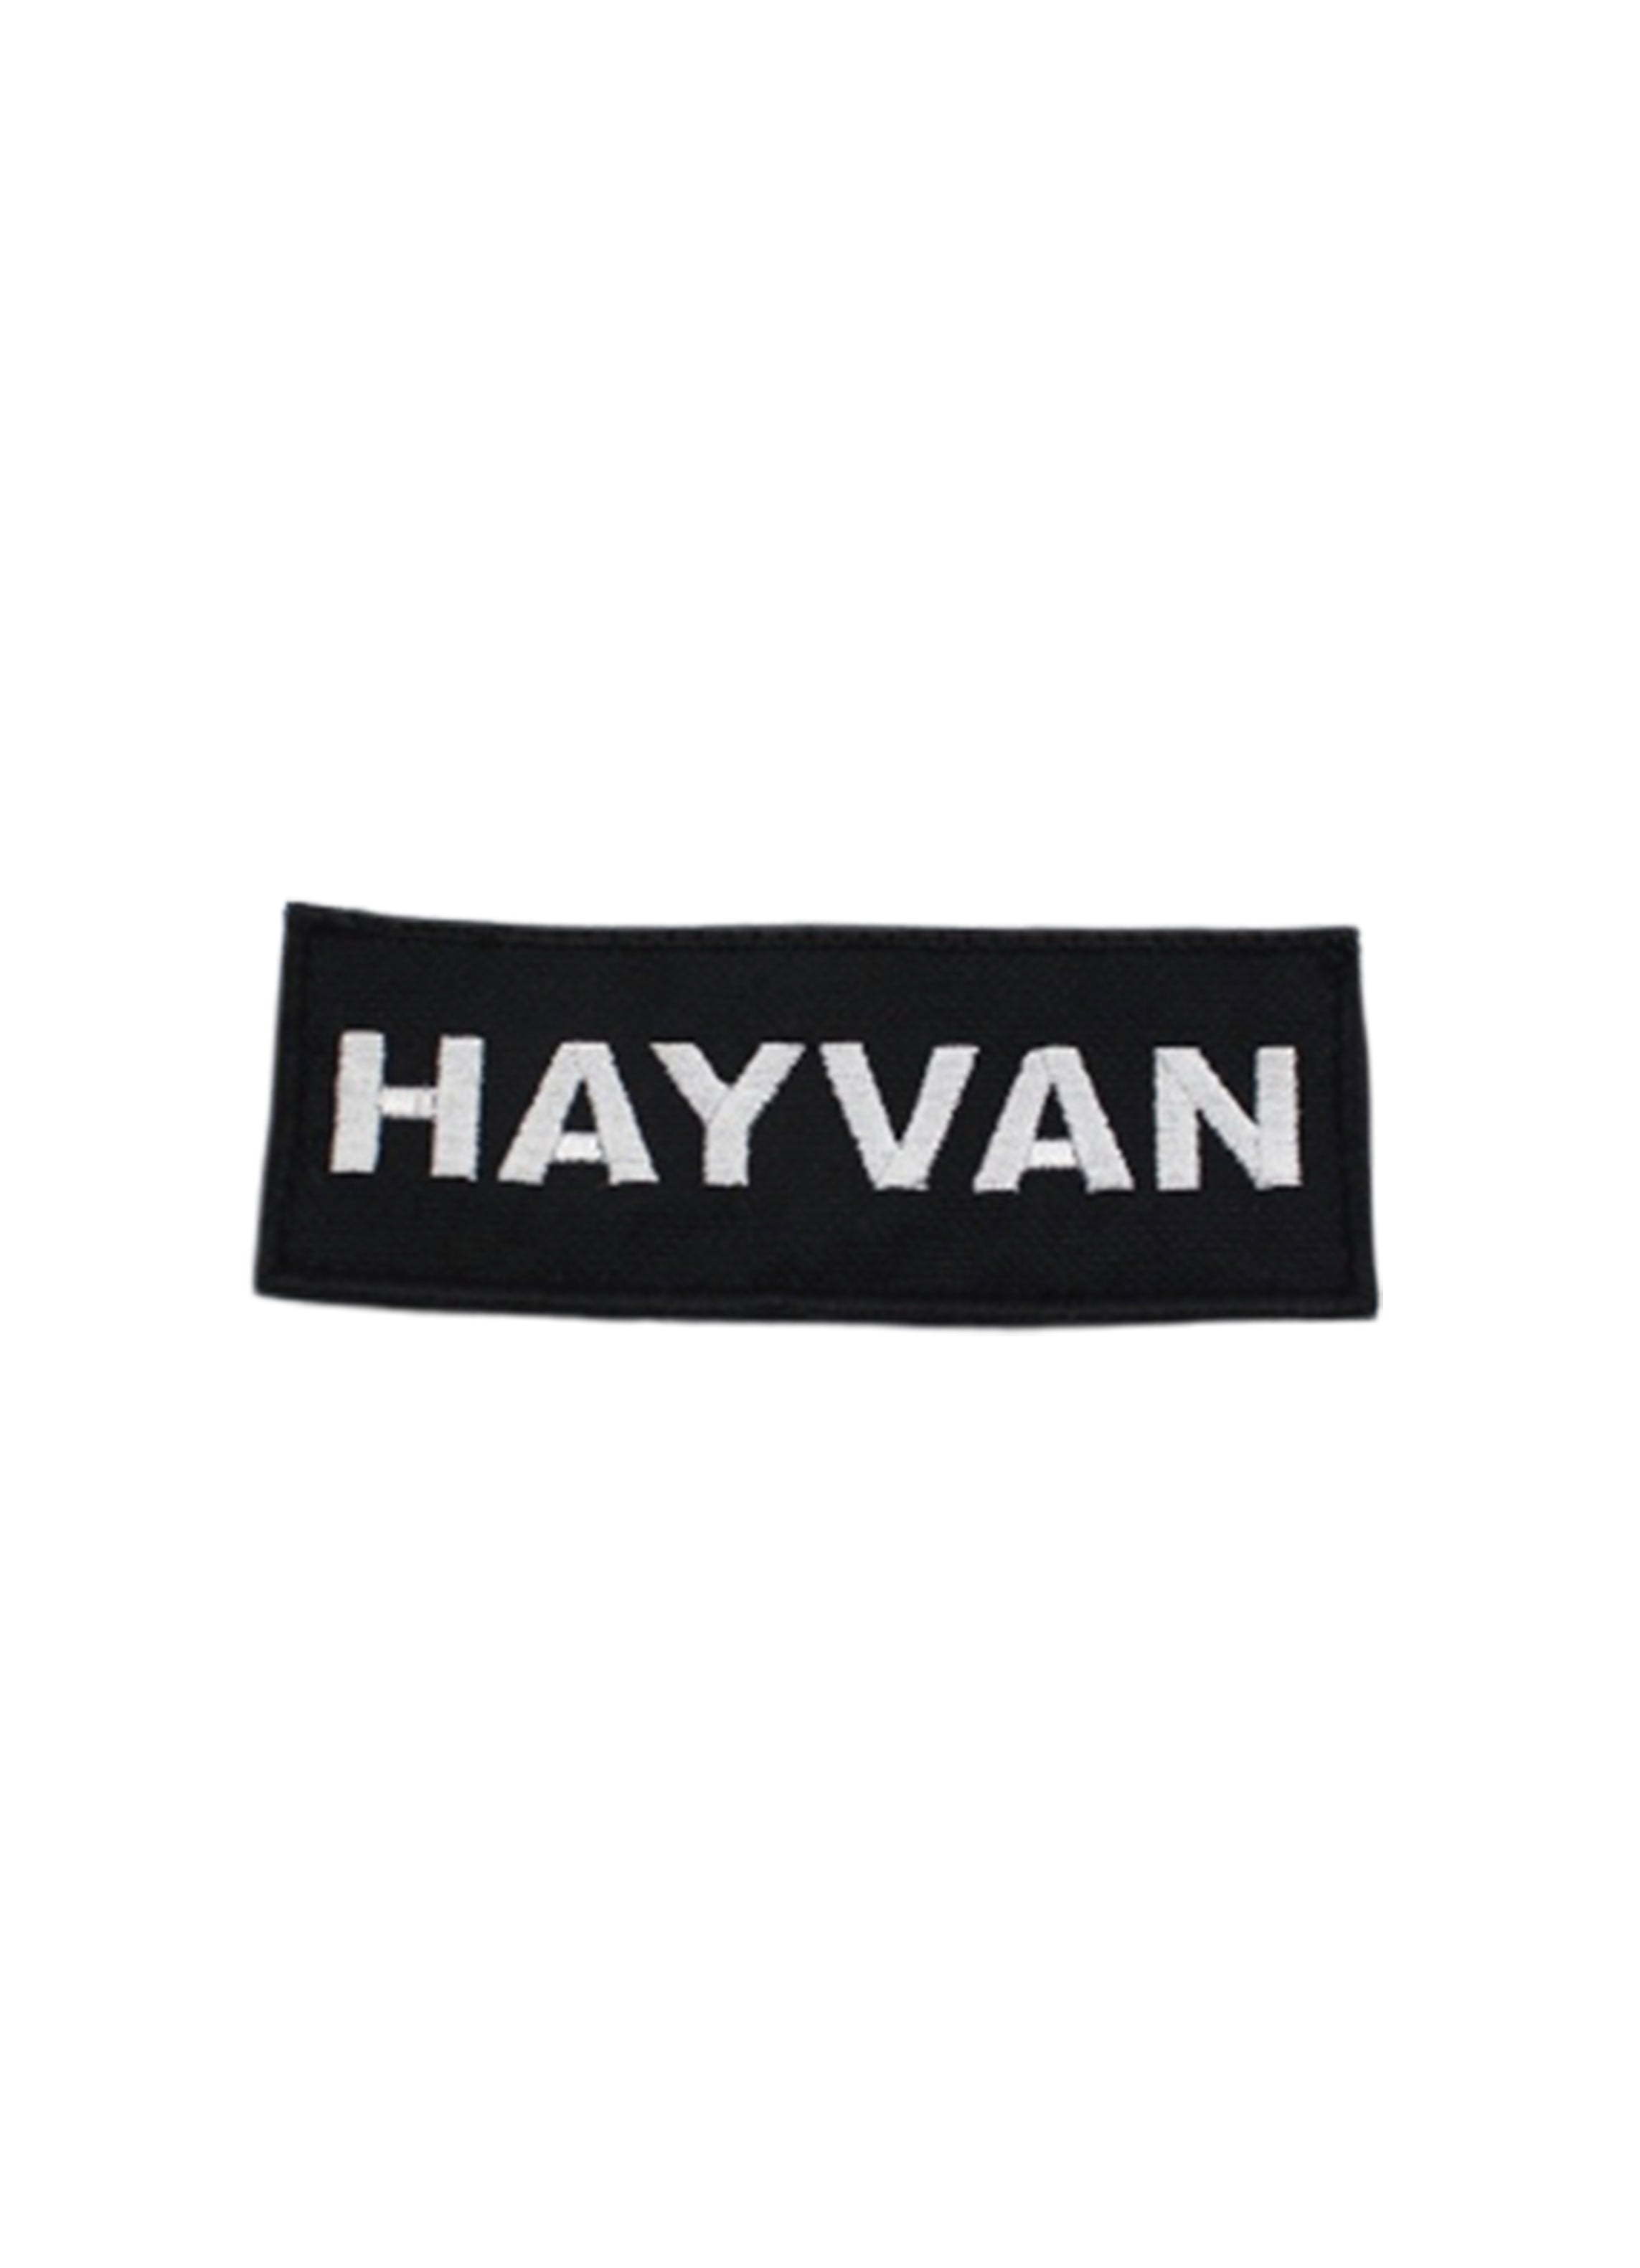 Patch Hayvan